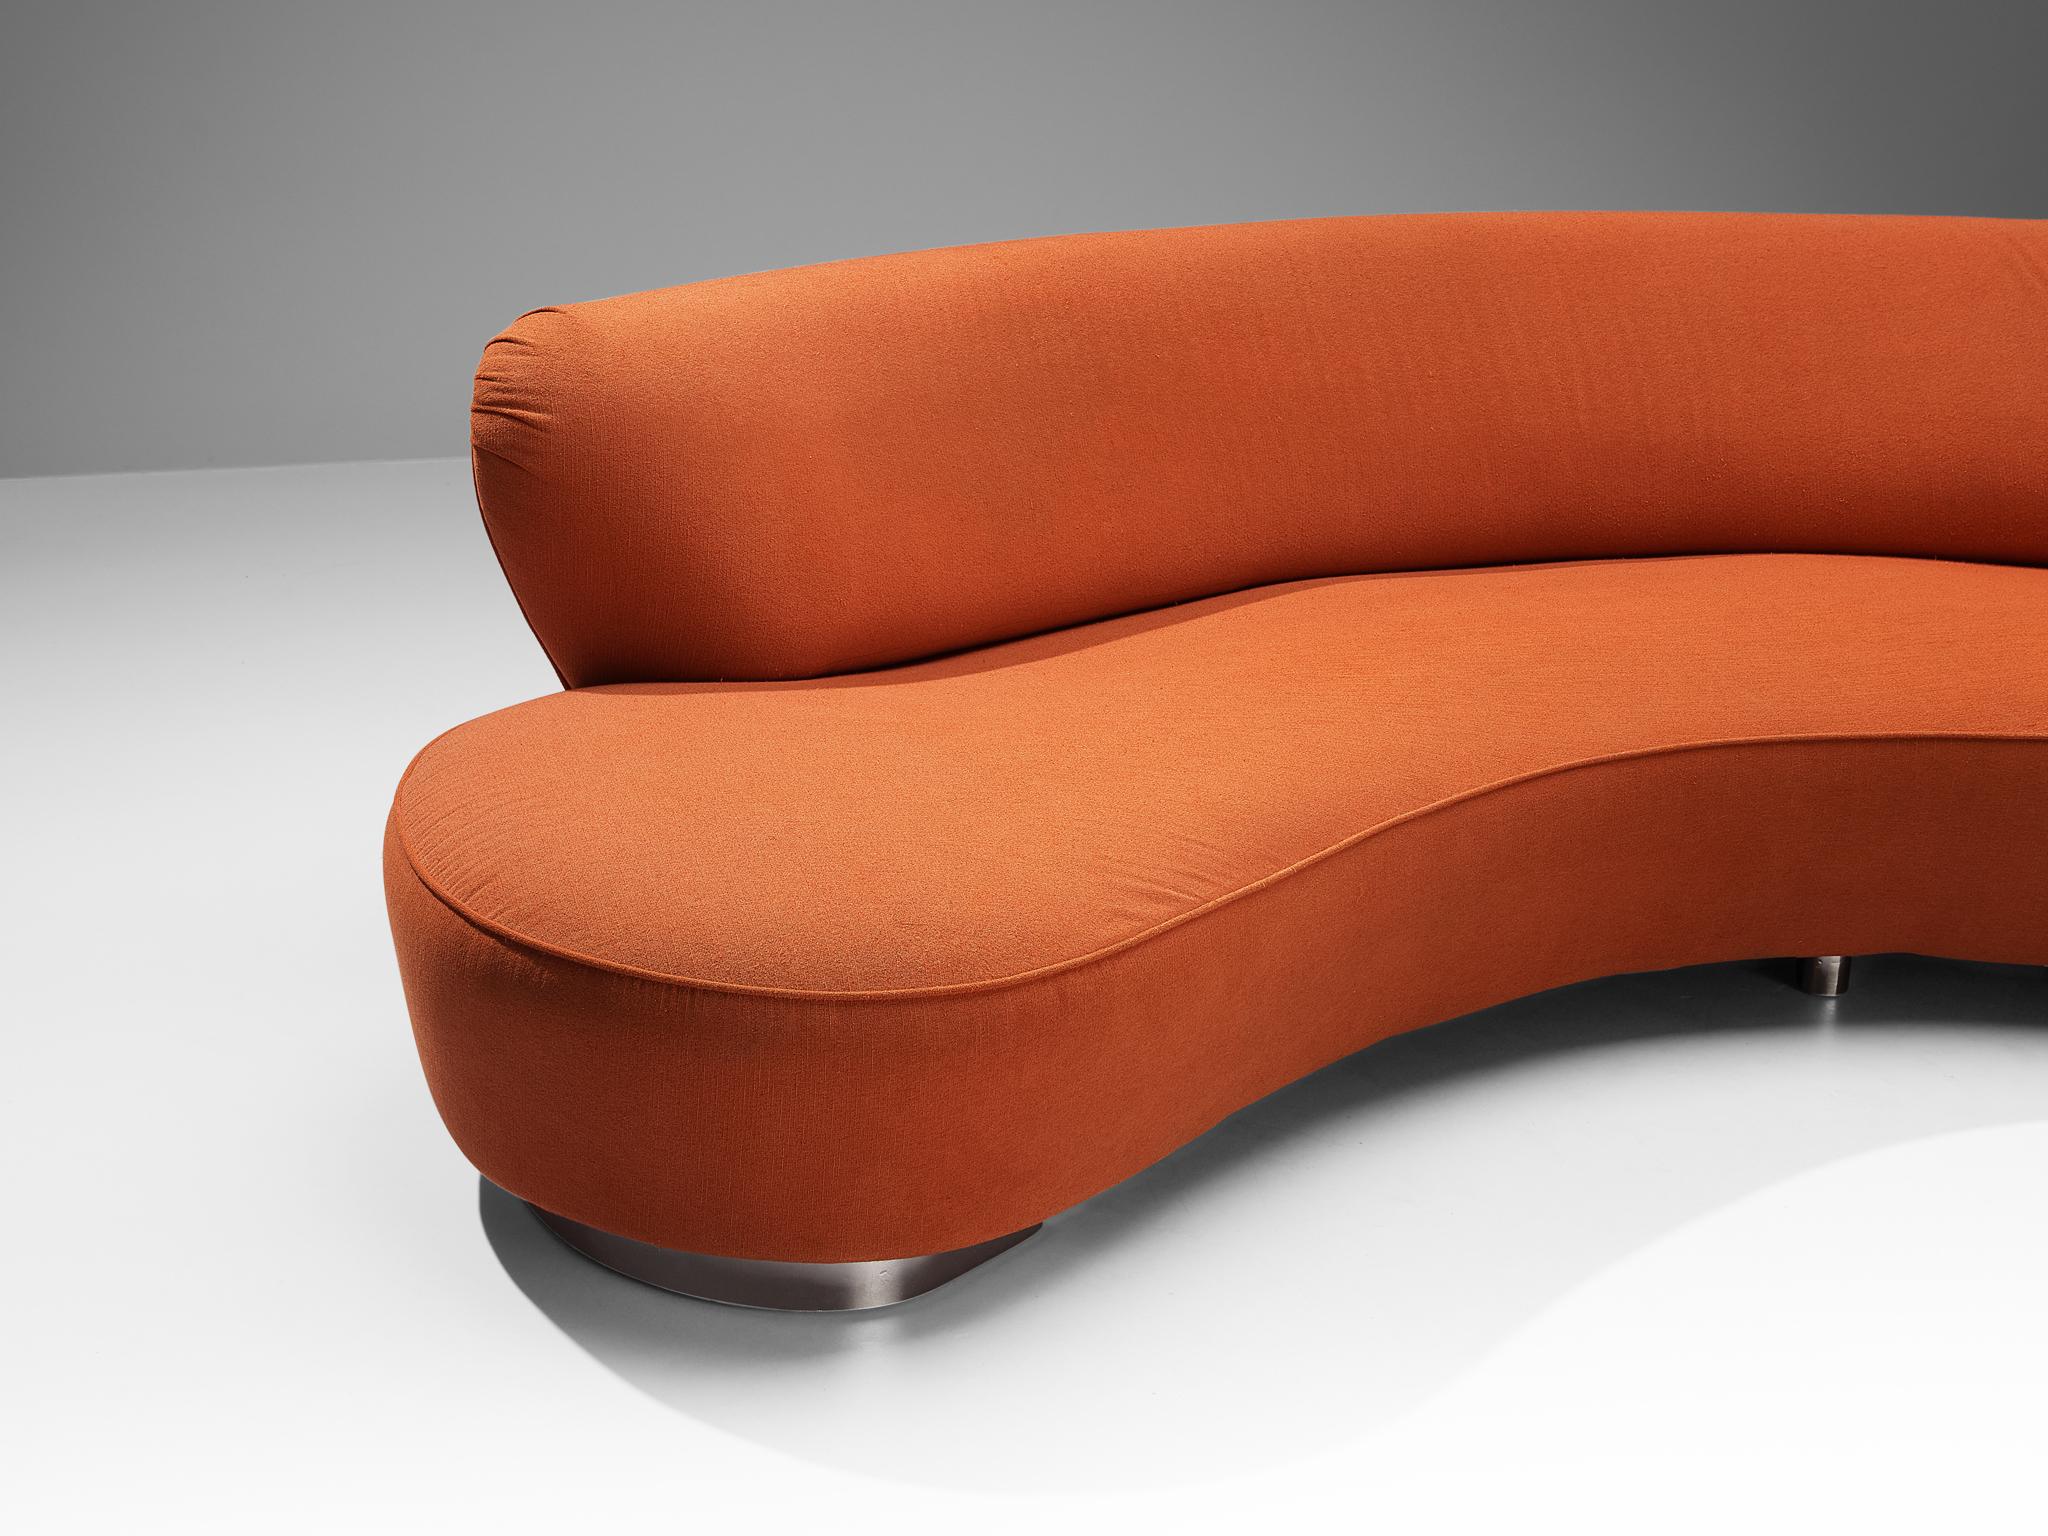 Iconic Vladimir Kagan ‘Serpentine’ Sofa with Ottoman in Red Orange Fabric 2